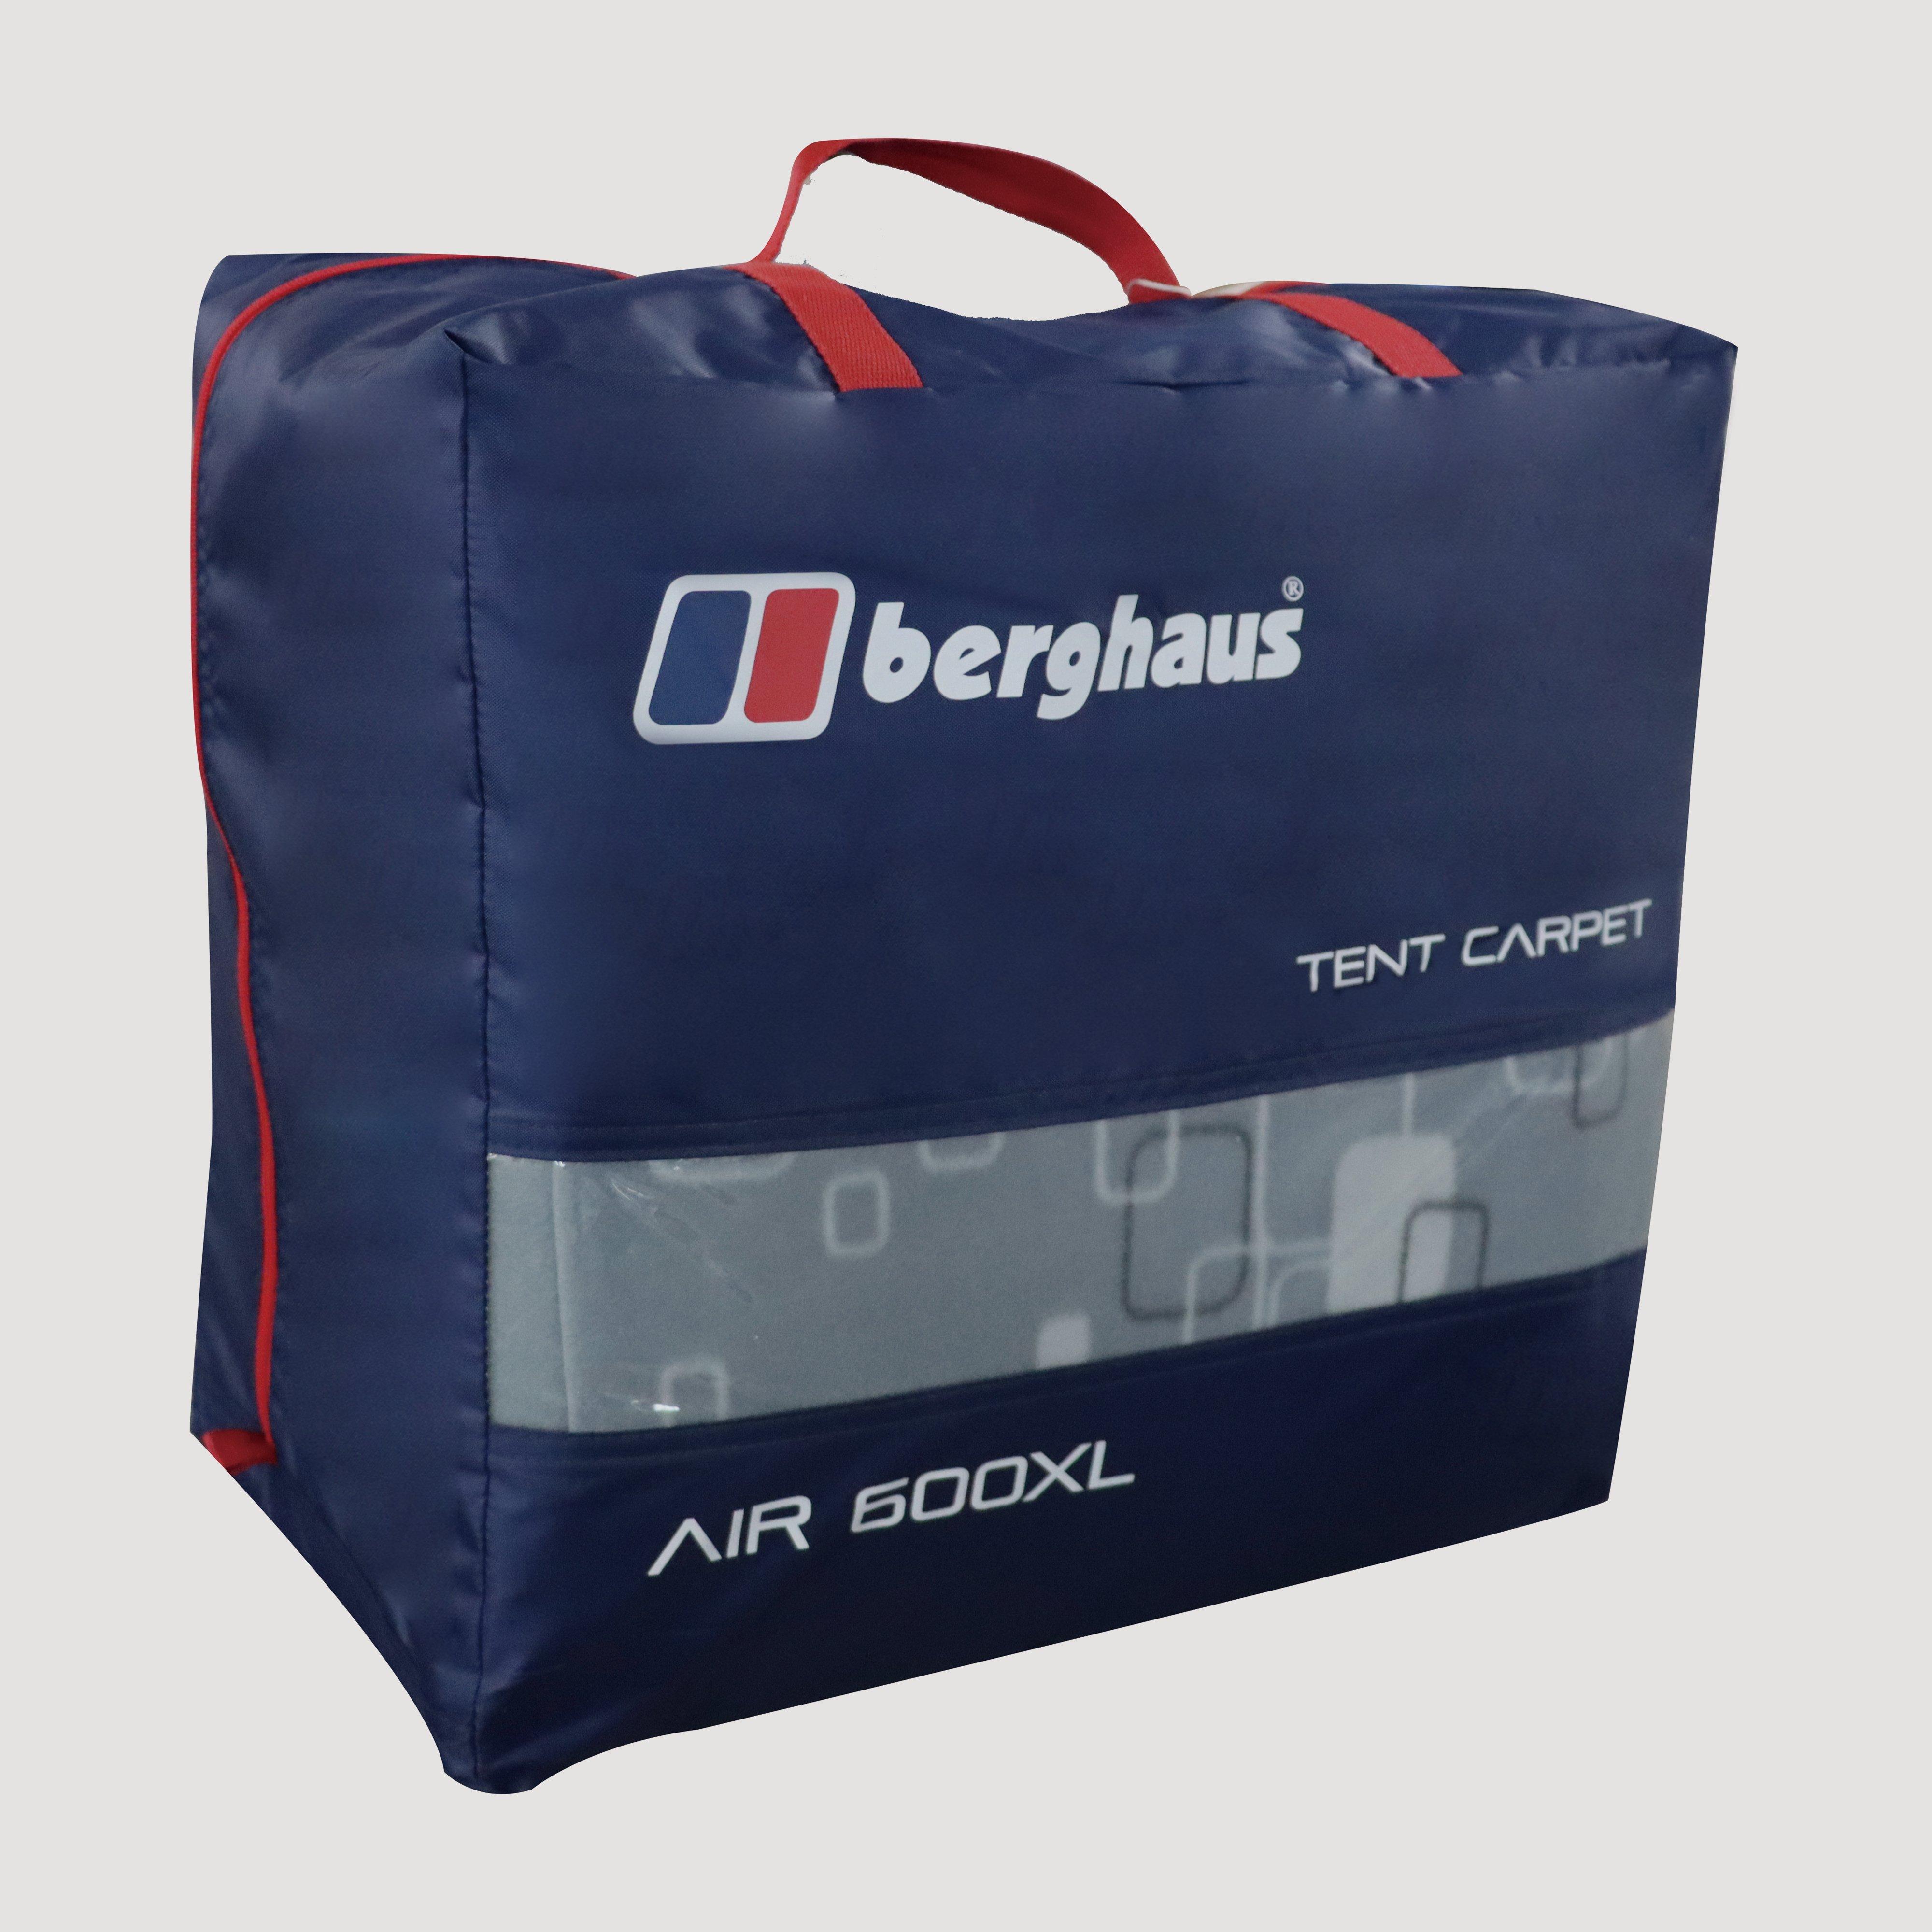 Berghaus Air 600Xl/6.1Xl/6Xl Tent Carpet - Dark Grey, Dark Grey